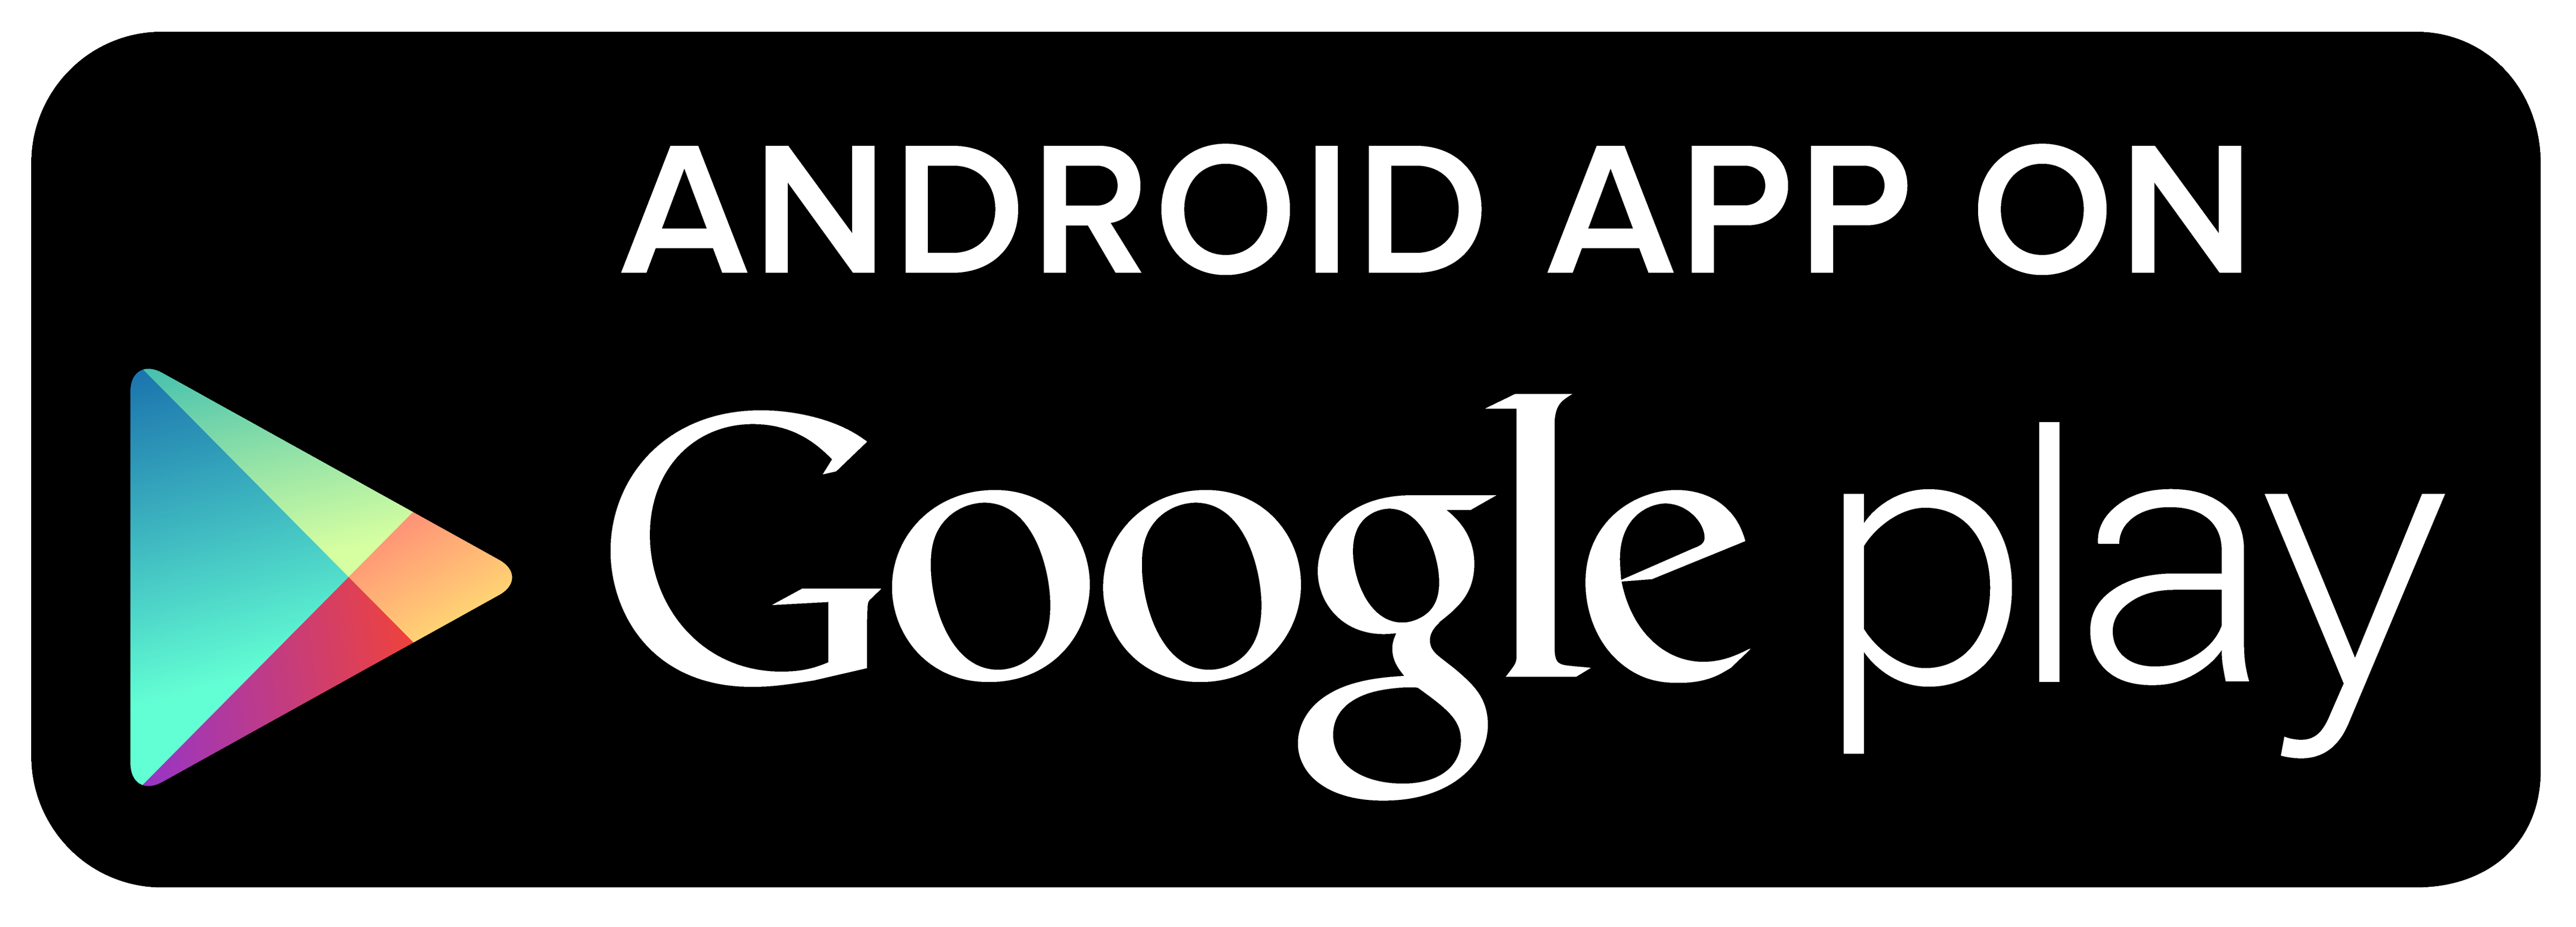 Google play 50. App Store Google Play. Логотип гугл плей. Иконка app Store и Google Play. Иконки эпстор и гуглплей.